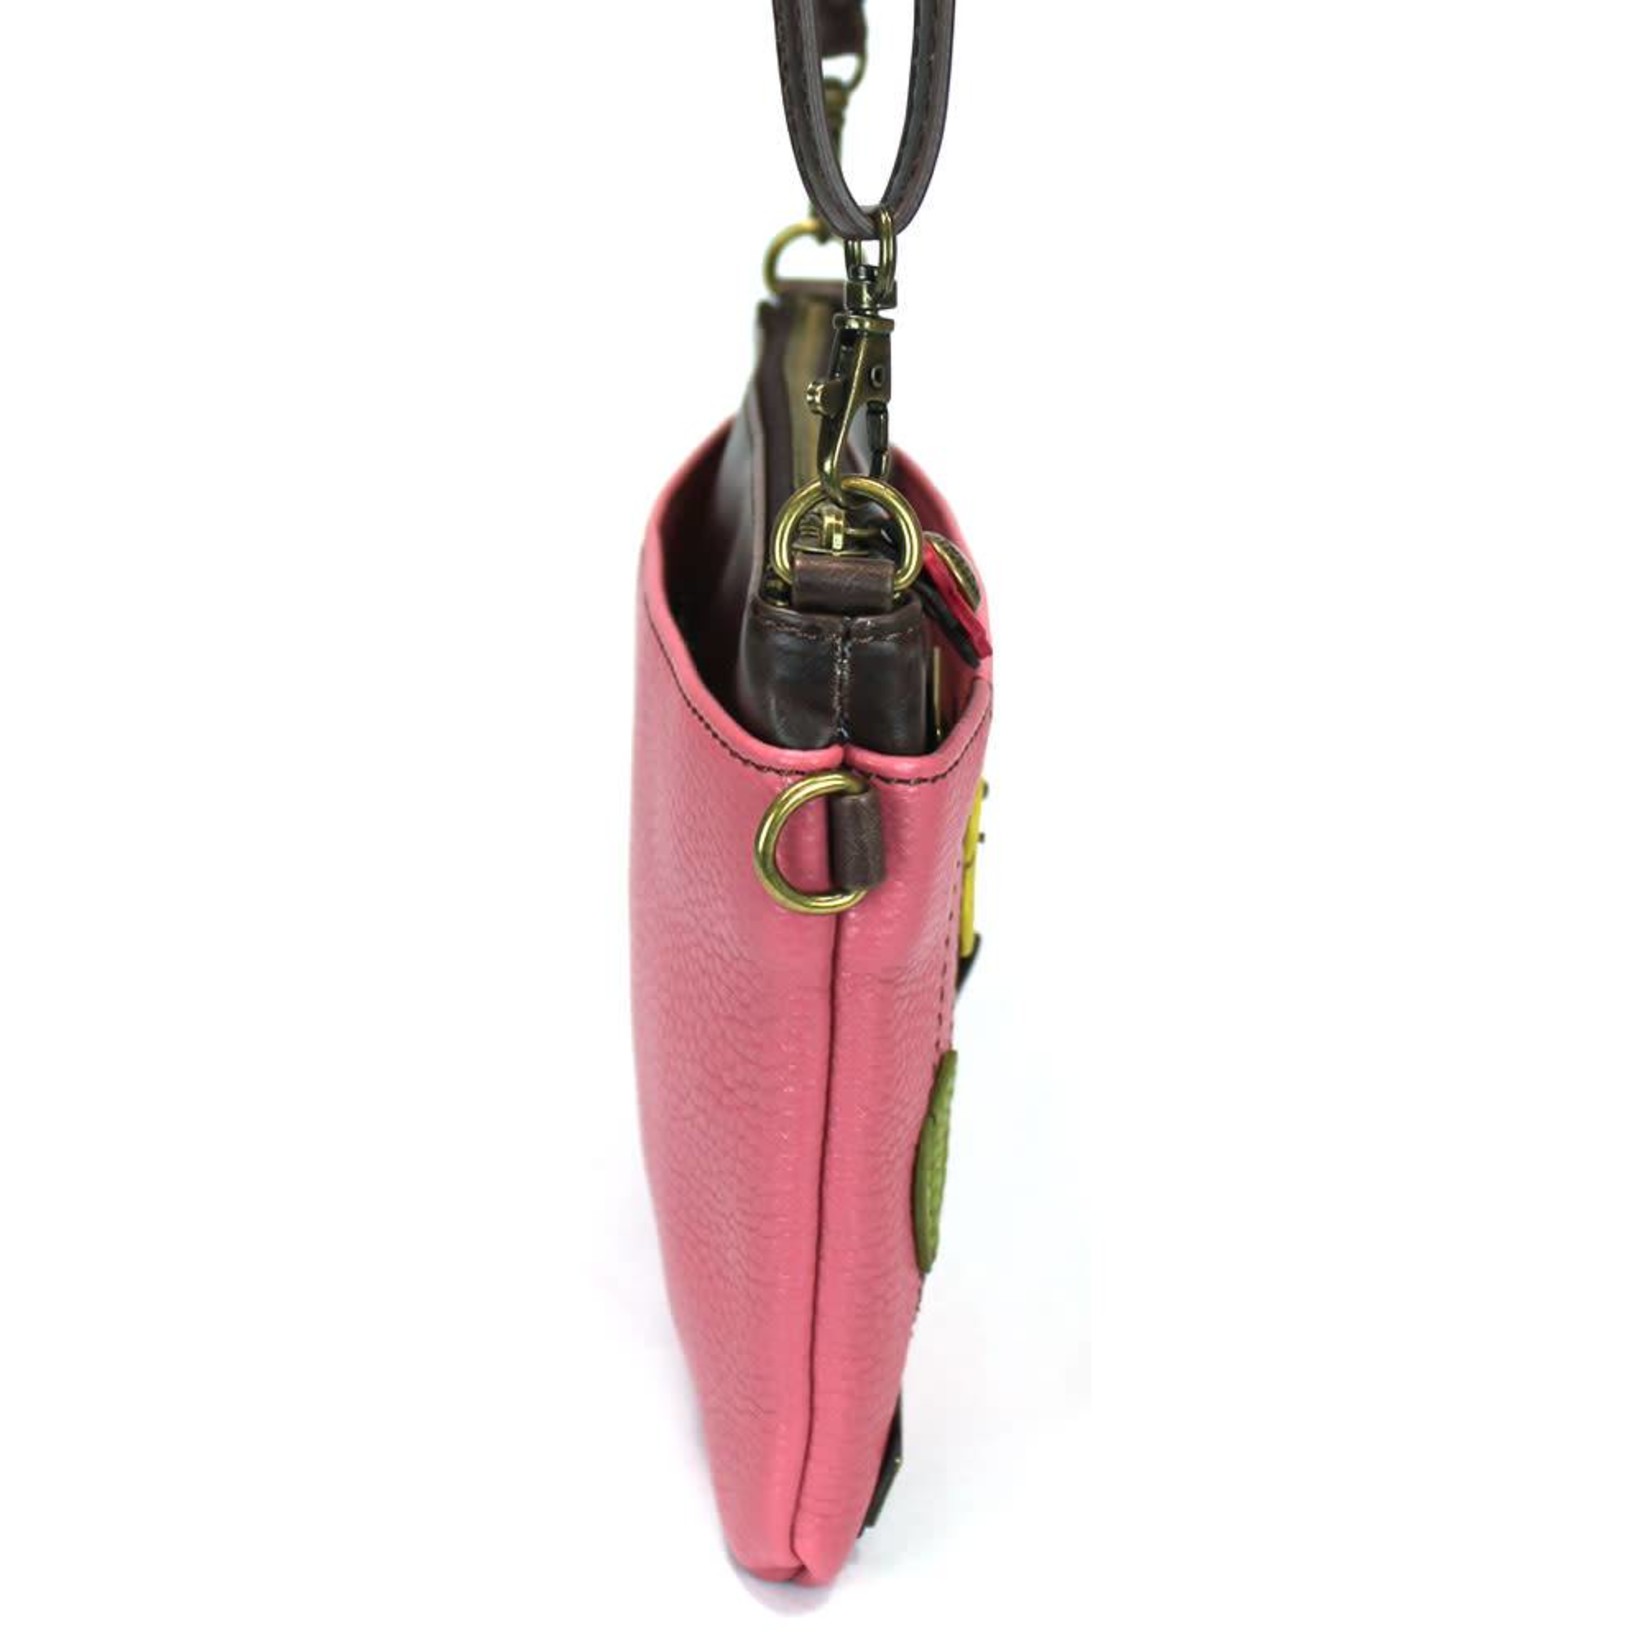 Chala Butterfly Cellphone Crossbody Bag 827BF8 – True Betty Boutique